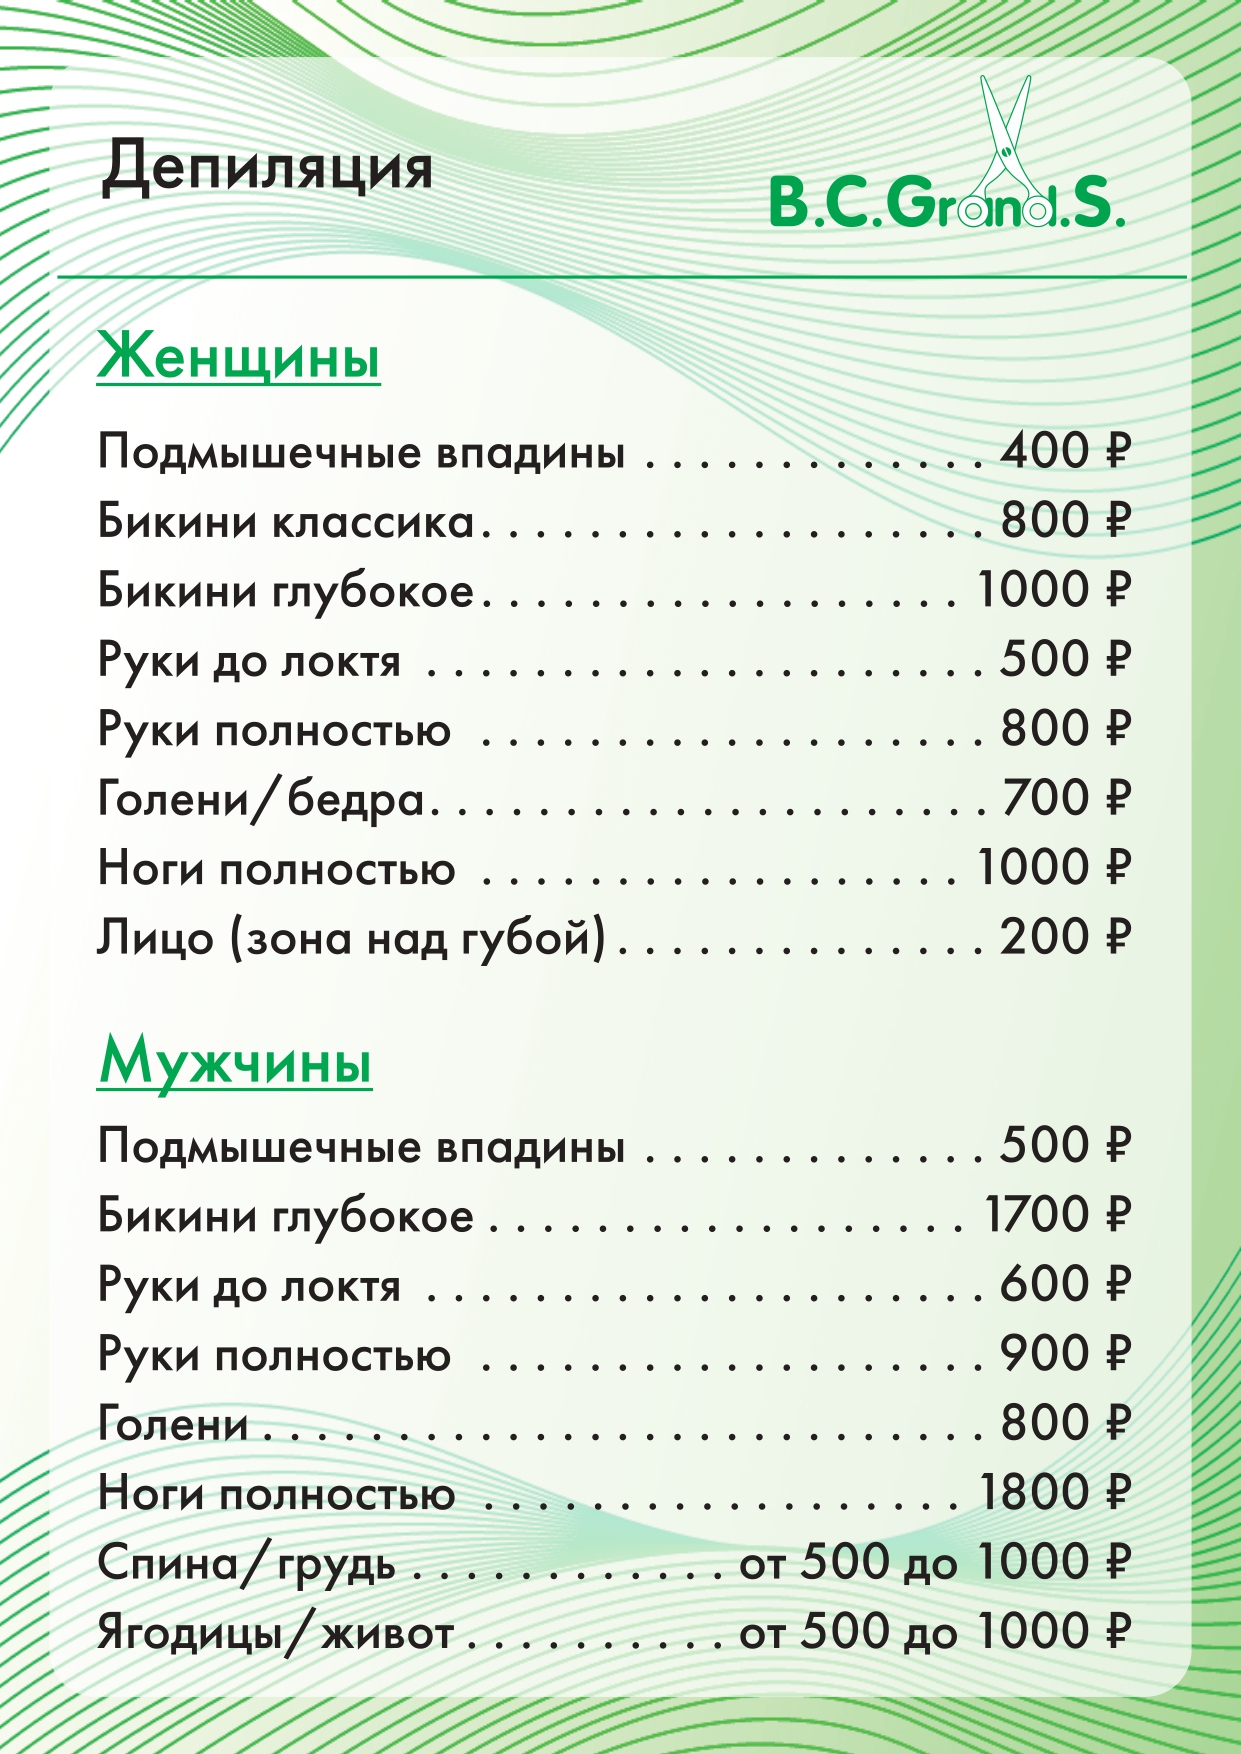 Цены салона красоты Grand.s в Кирове